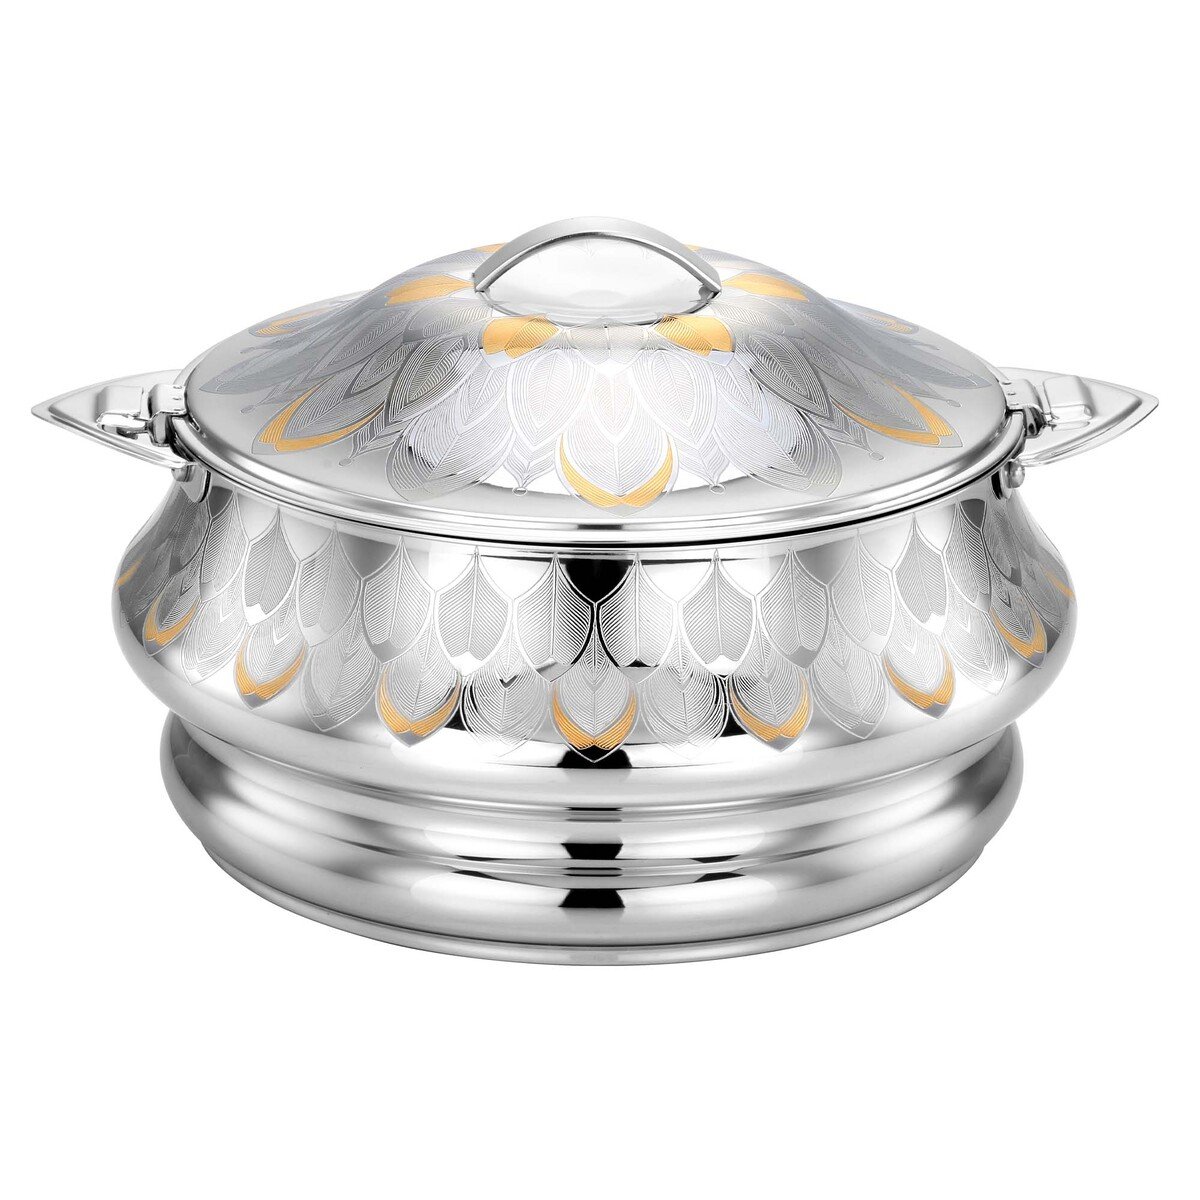 Pradeep Salena Stainless Steel Hot Pot, 5000 ml, Gold